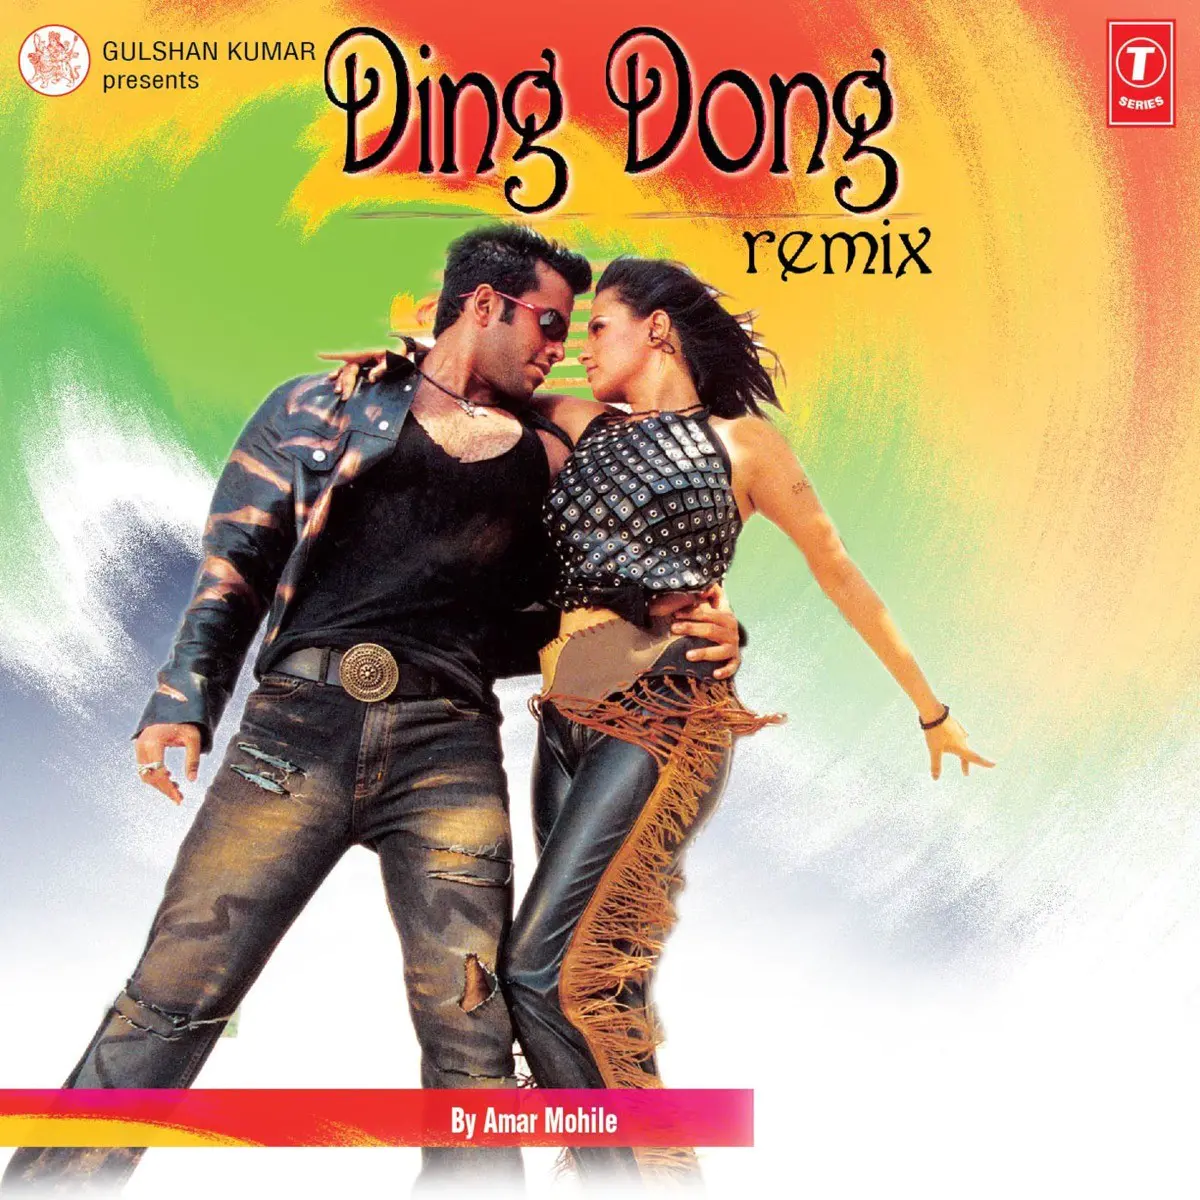 Kuch Bhi Na Kaha Lyrics In Hindi Ding Dong Remix Kuch Bhi Na Kaha Song Lyrics In English Free Online On Gaana Com